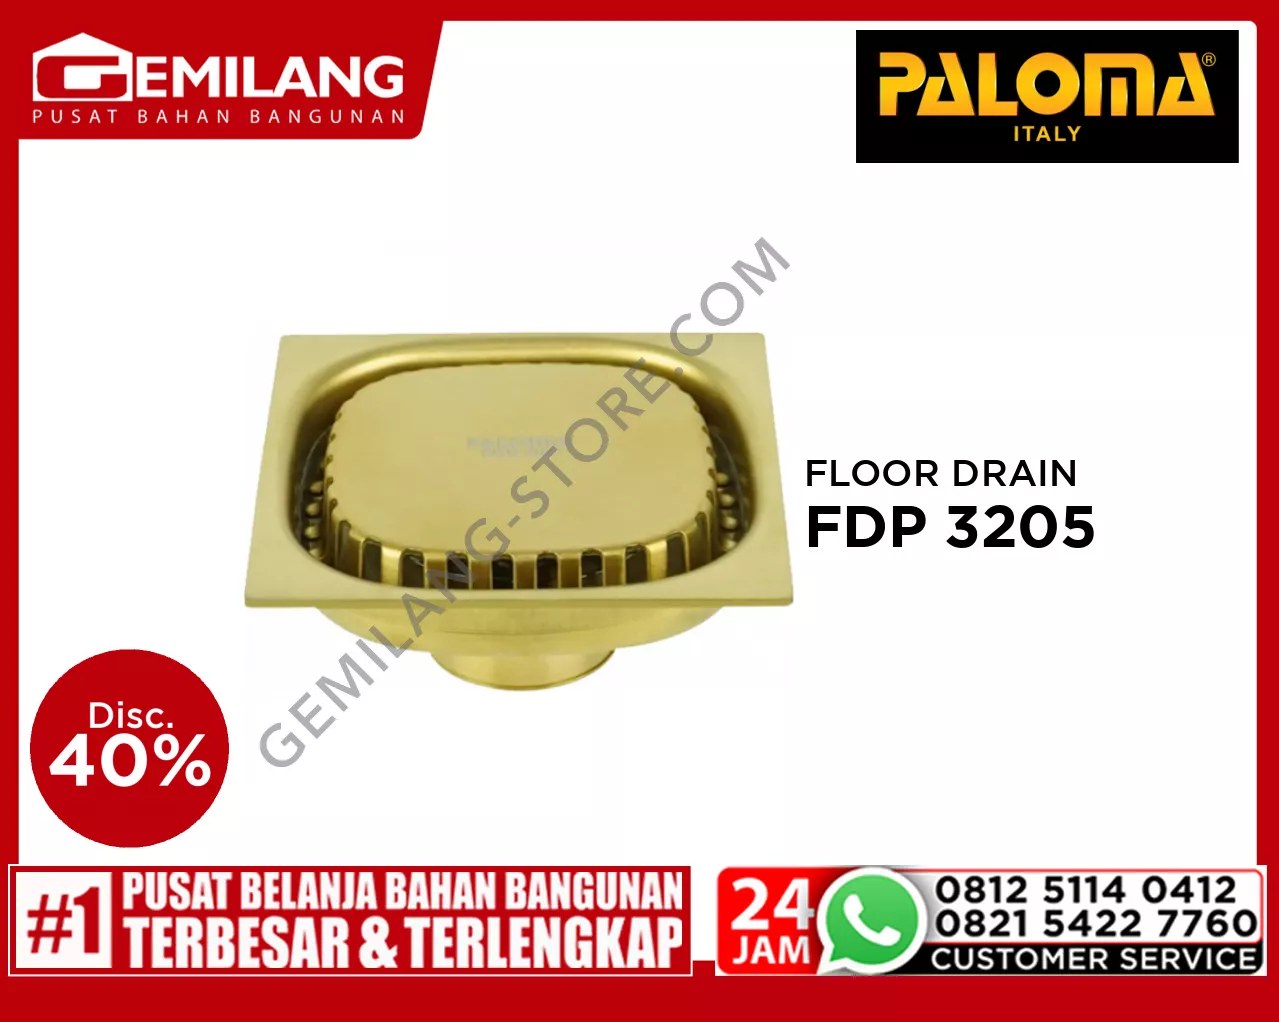 PALOMA FLOOR DRAIN GOLD FDP 3205